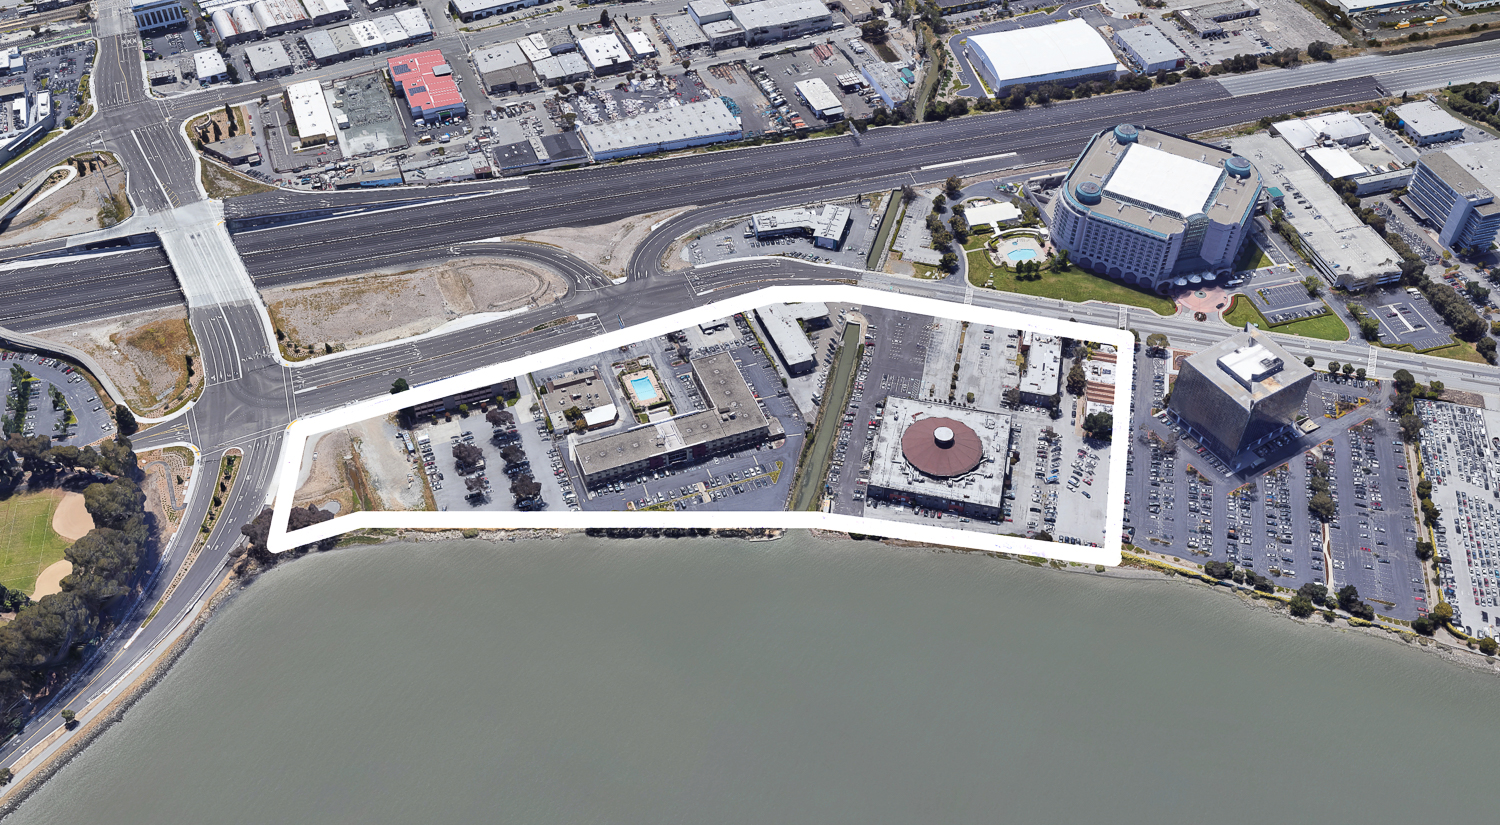 1200-1340 Bayshore Highway, aerial perspective via Google Satellite